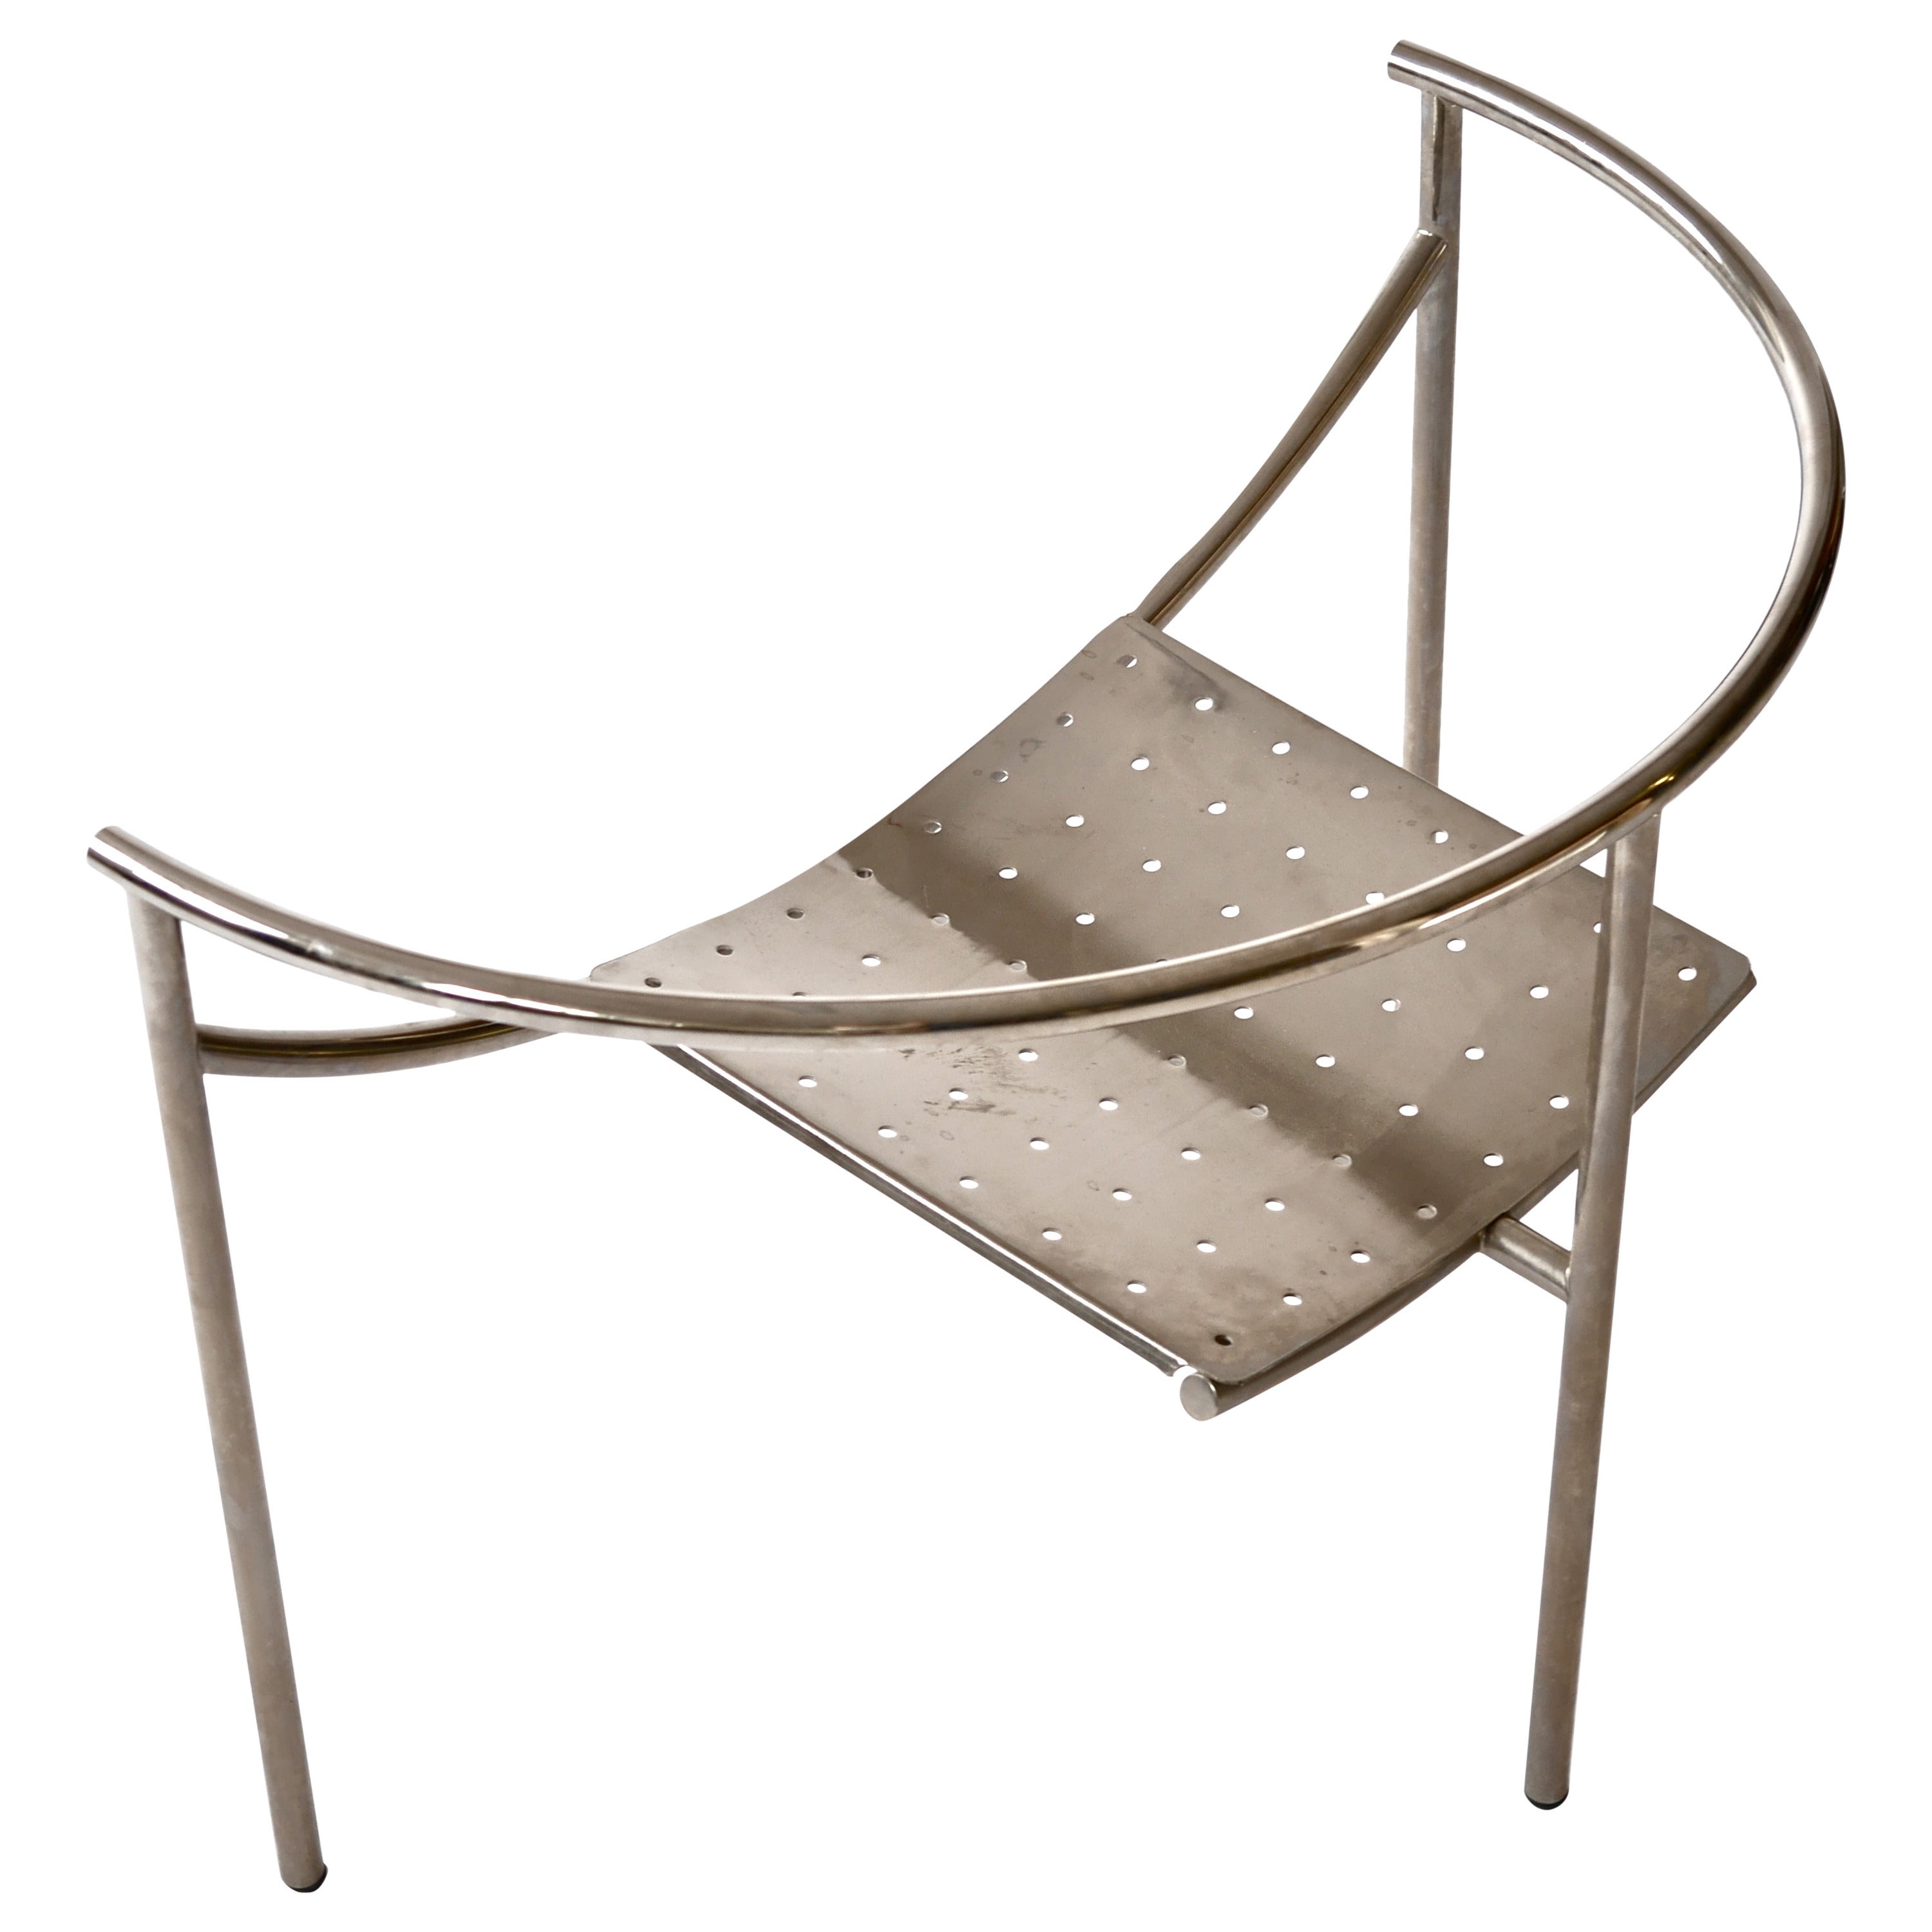 Philippe Starck "Doctor Sonderbar" Chair